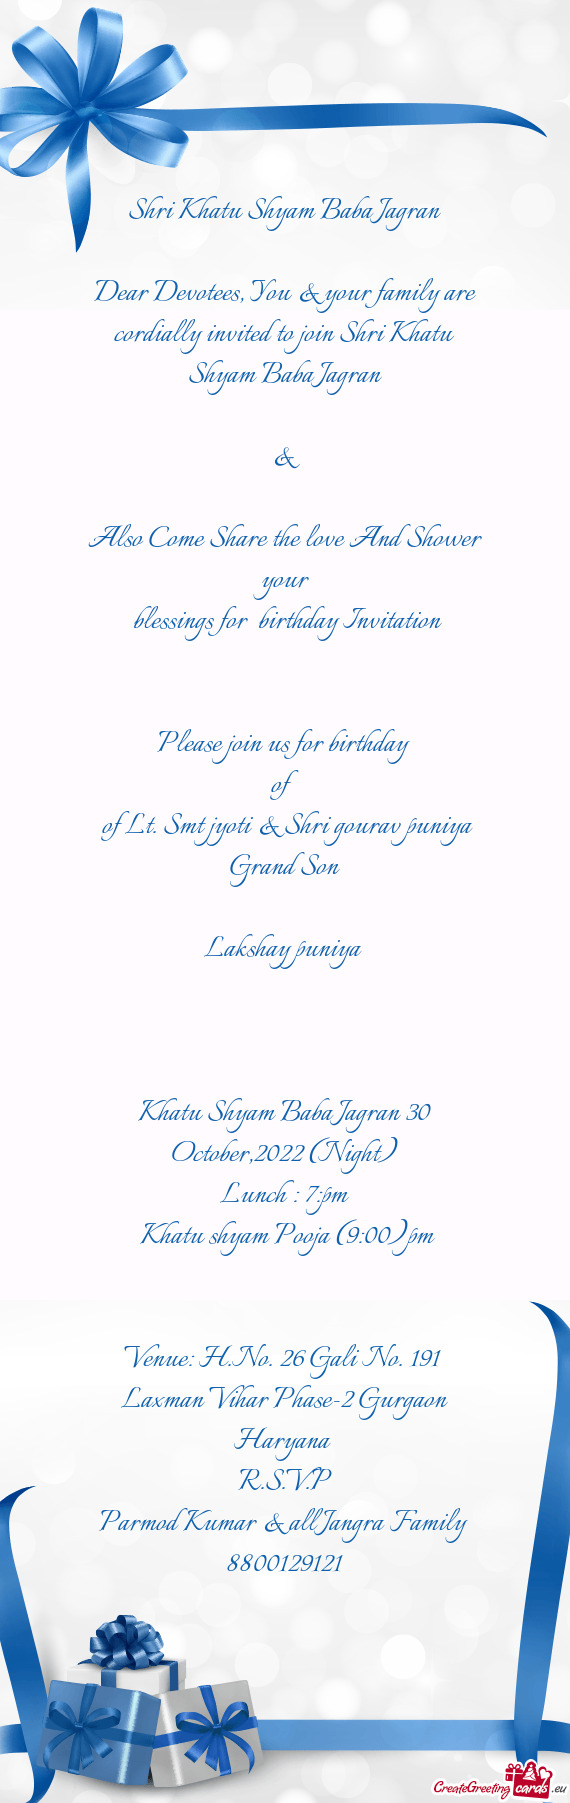 Blessings for birthday Invitation